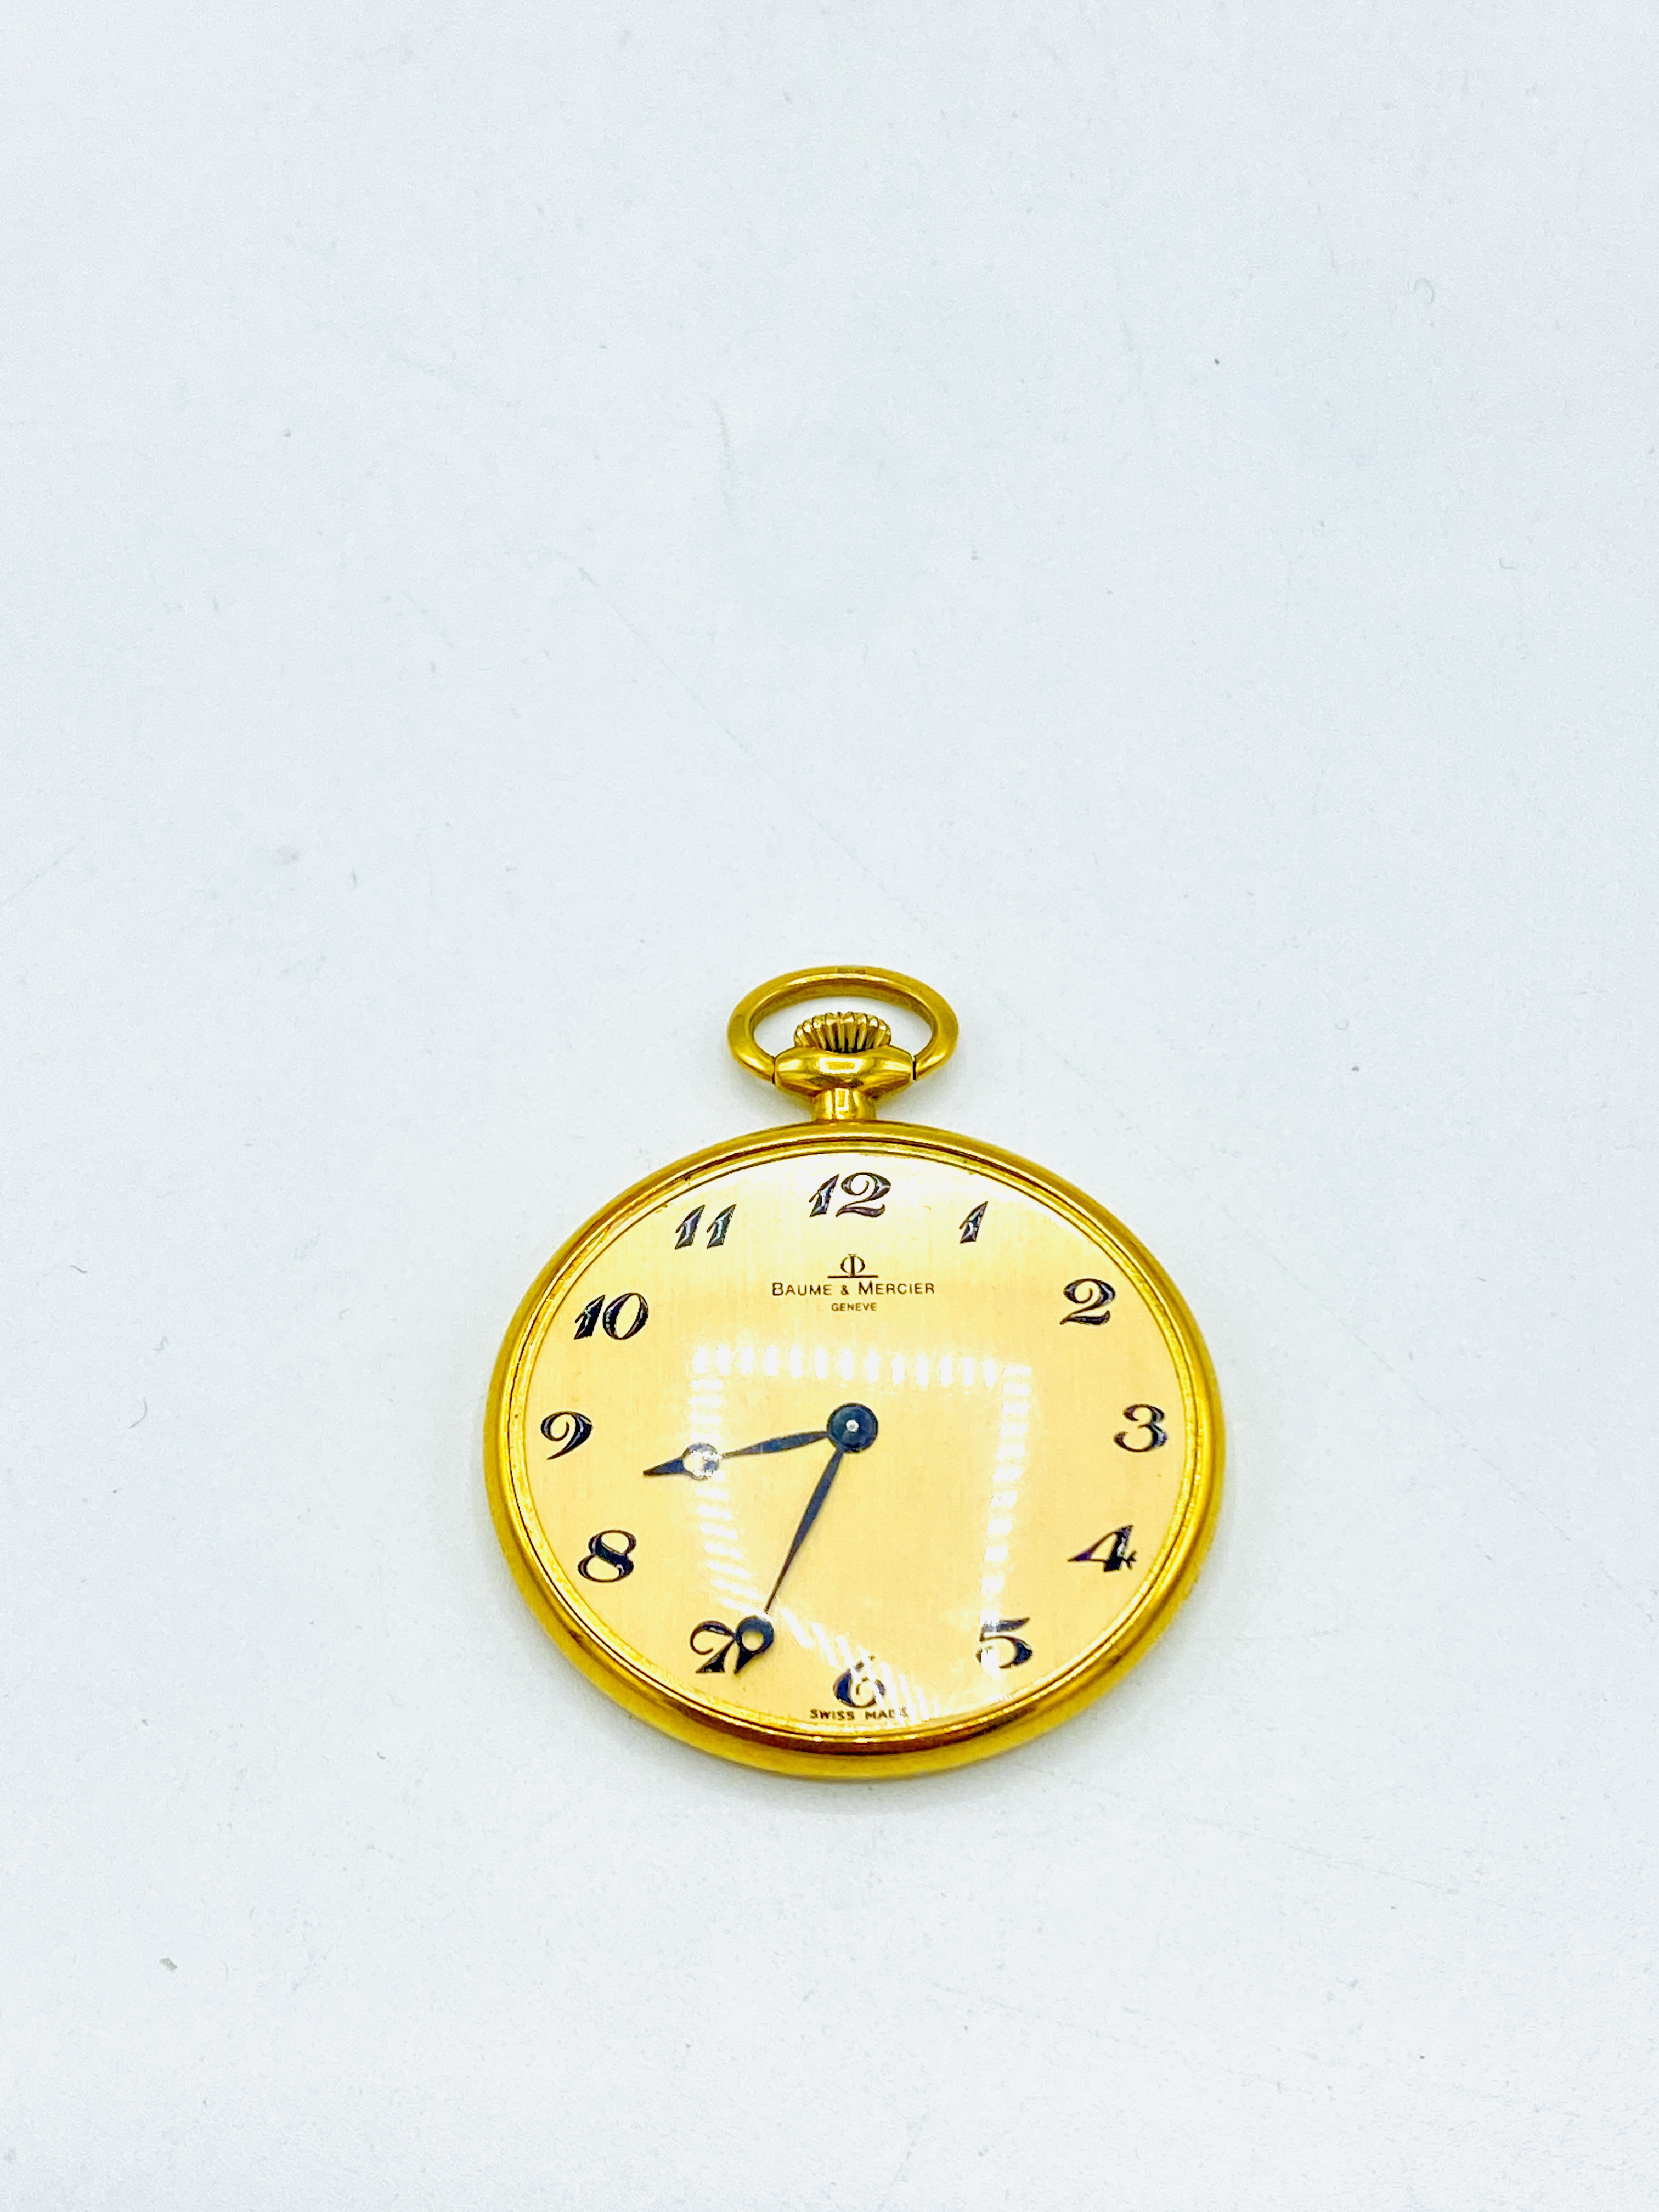 18ct gold case Baume & Mercier manual wind pocket watch - Image 3 of 3